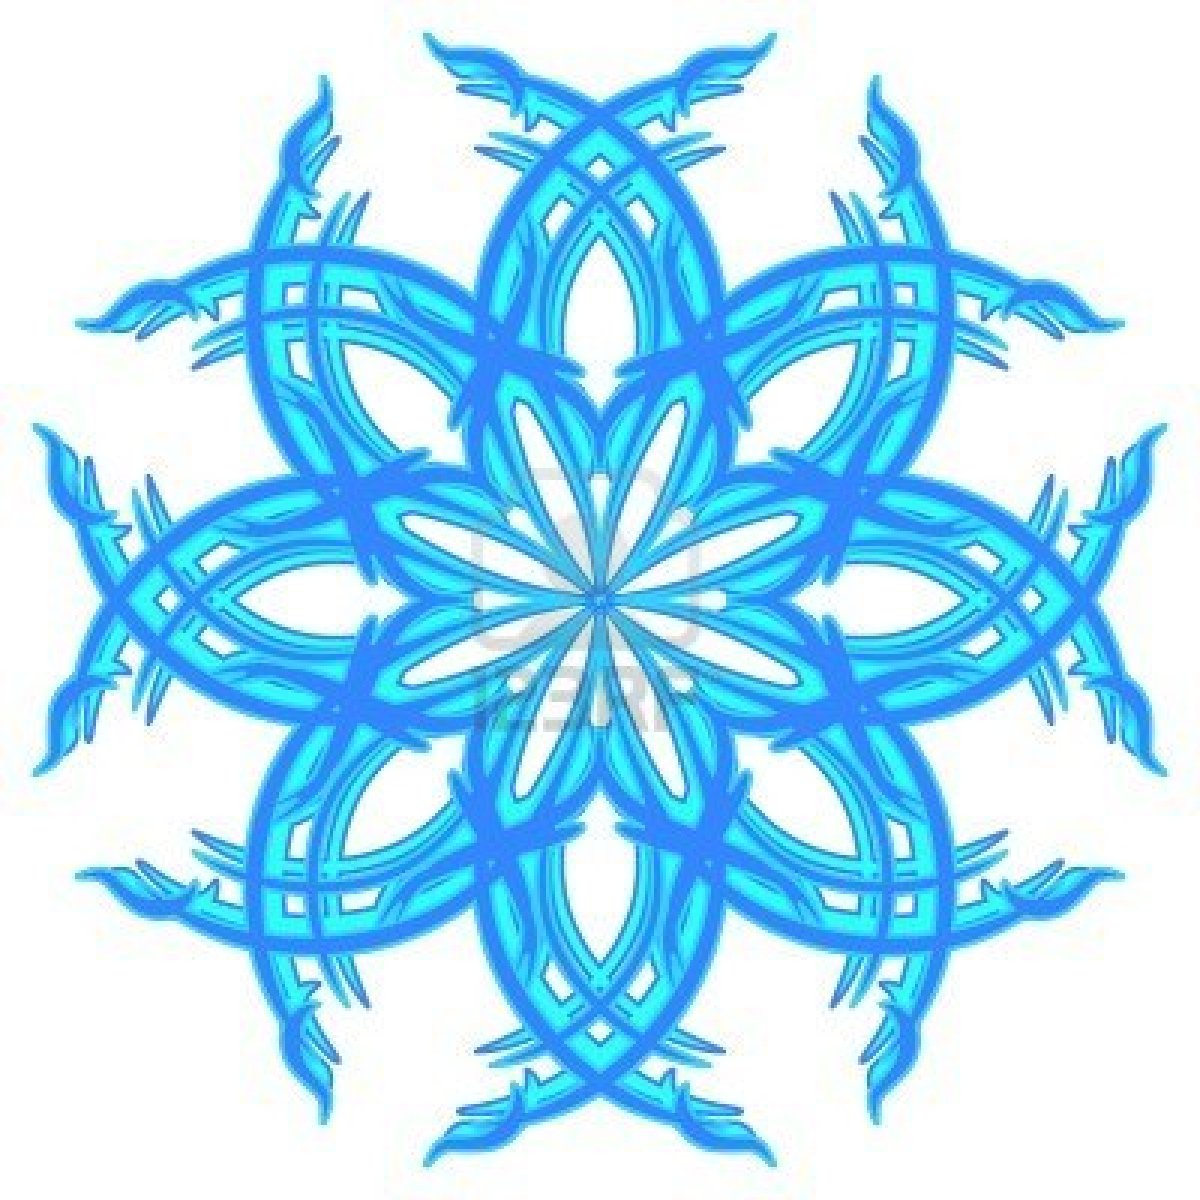 5489554-decorative-blue-vector-snowflake